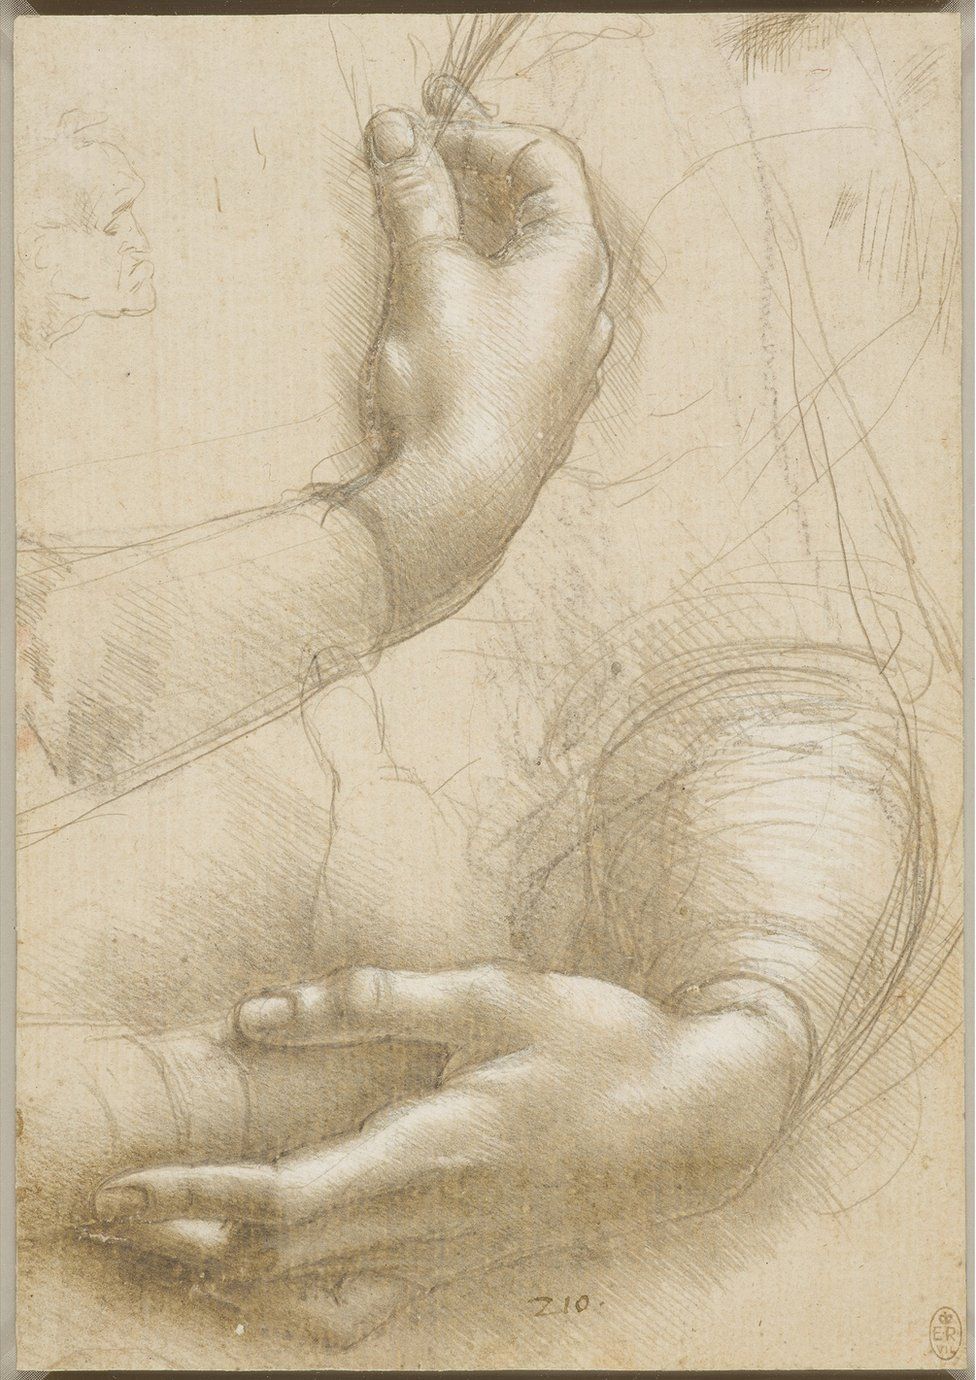 A drawing of a woman's hands by Leonardo da Vinci